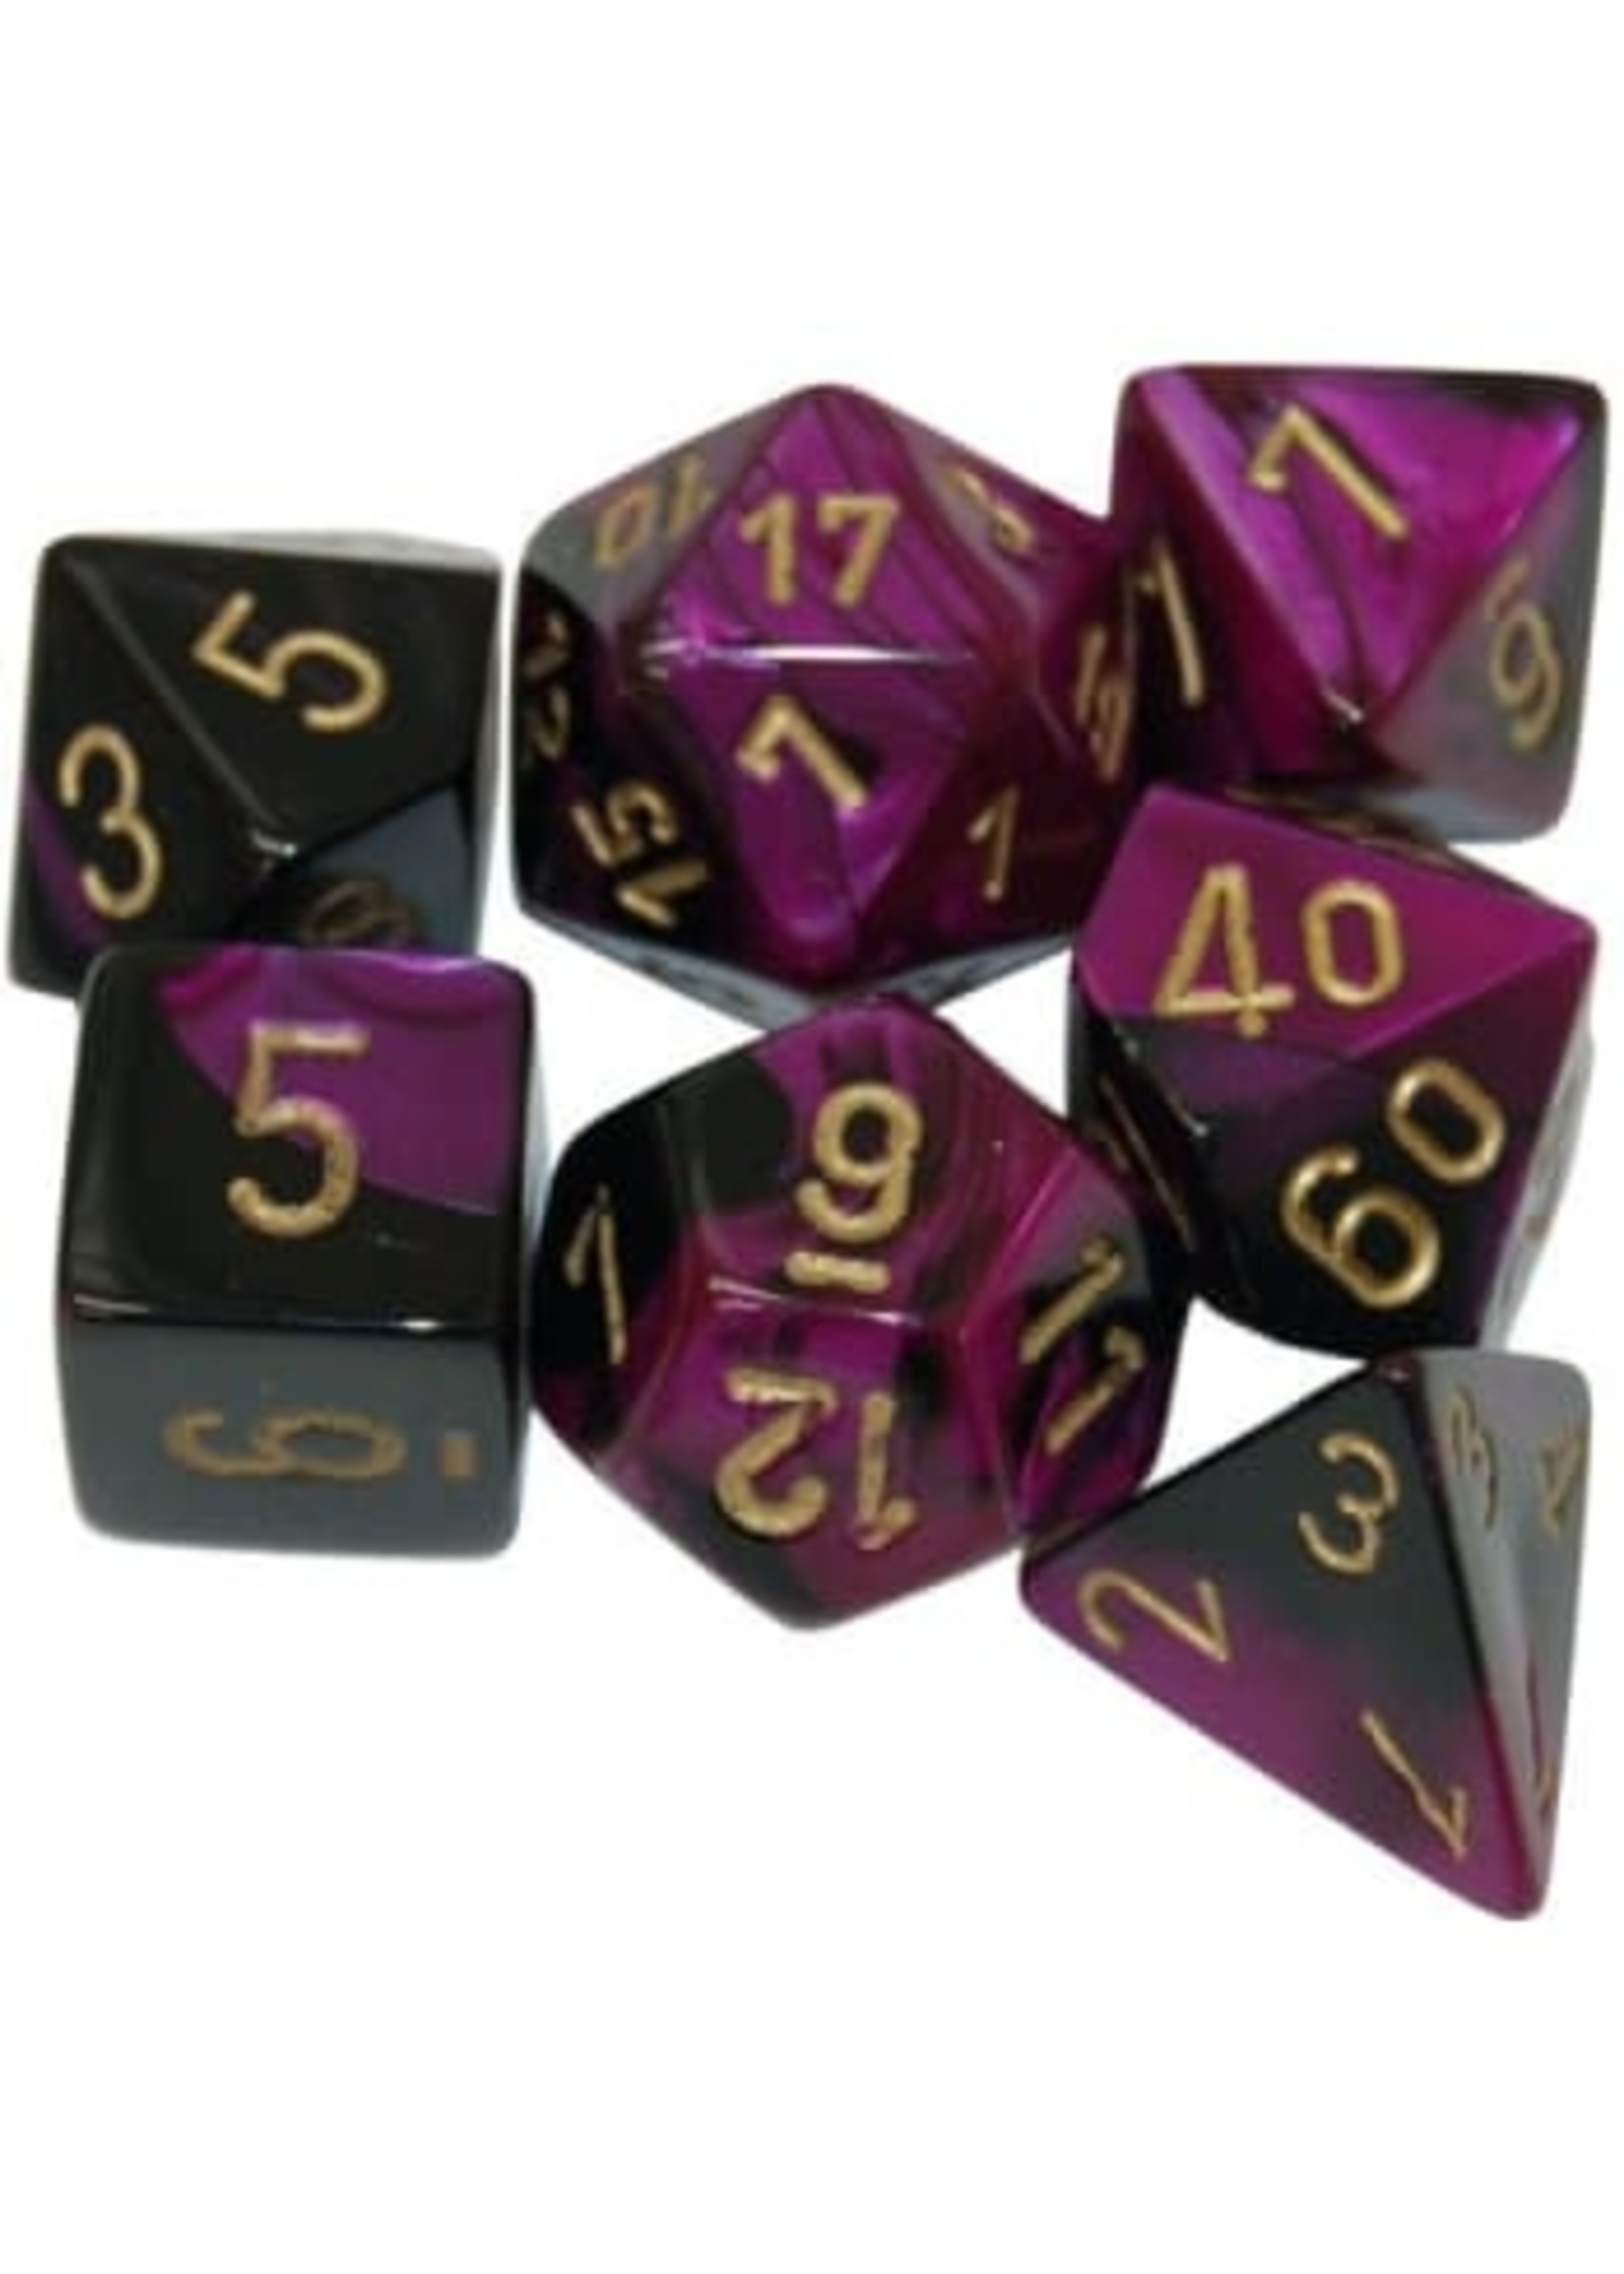 Chessex Gemini Mini 7 Set: Black and Purple  w/ gold